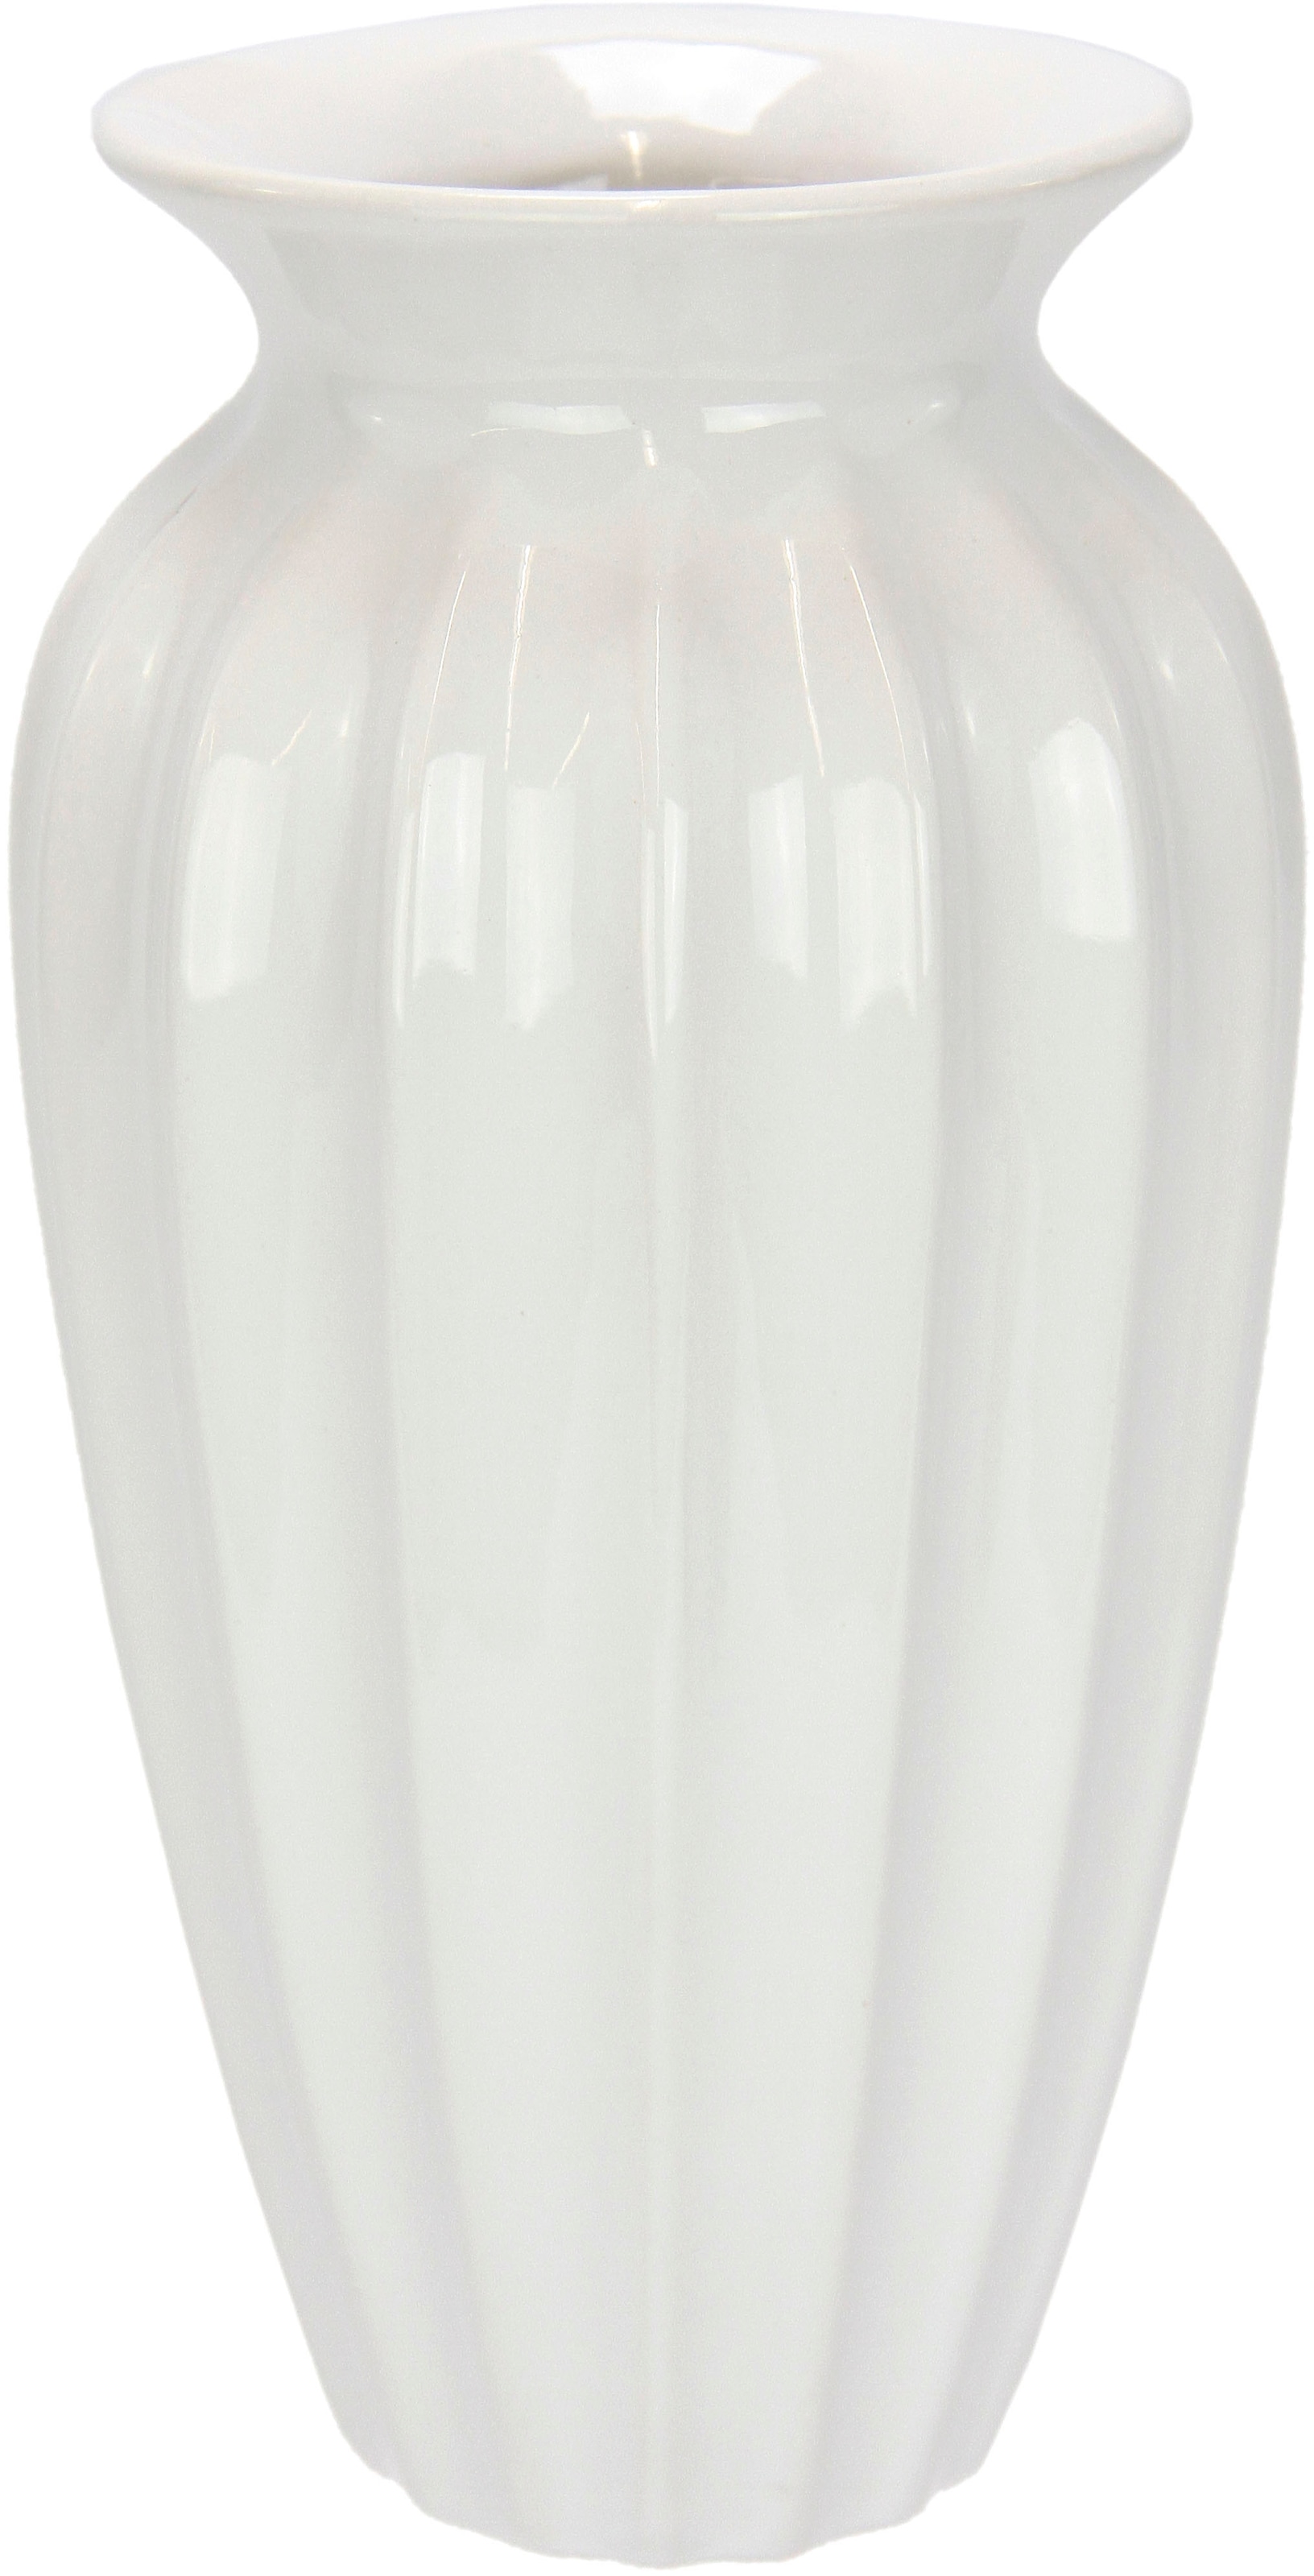 I.GE.A. Dekovase »Keramik Vase«, Aus Keramik, groß rund